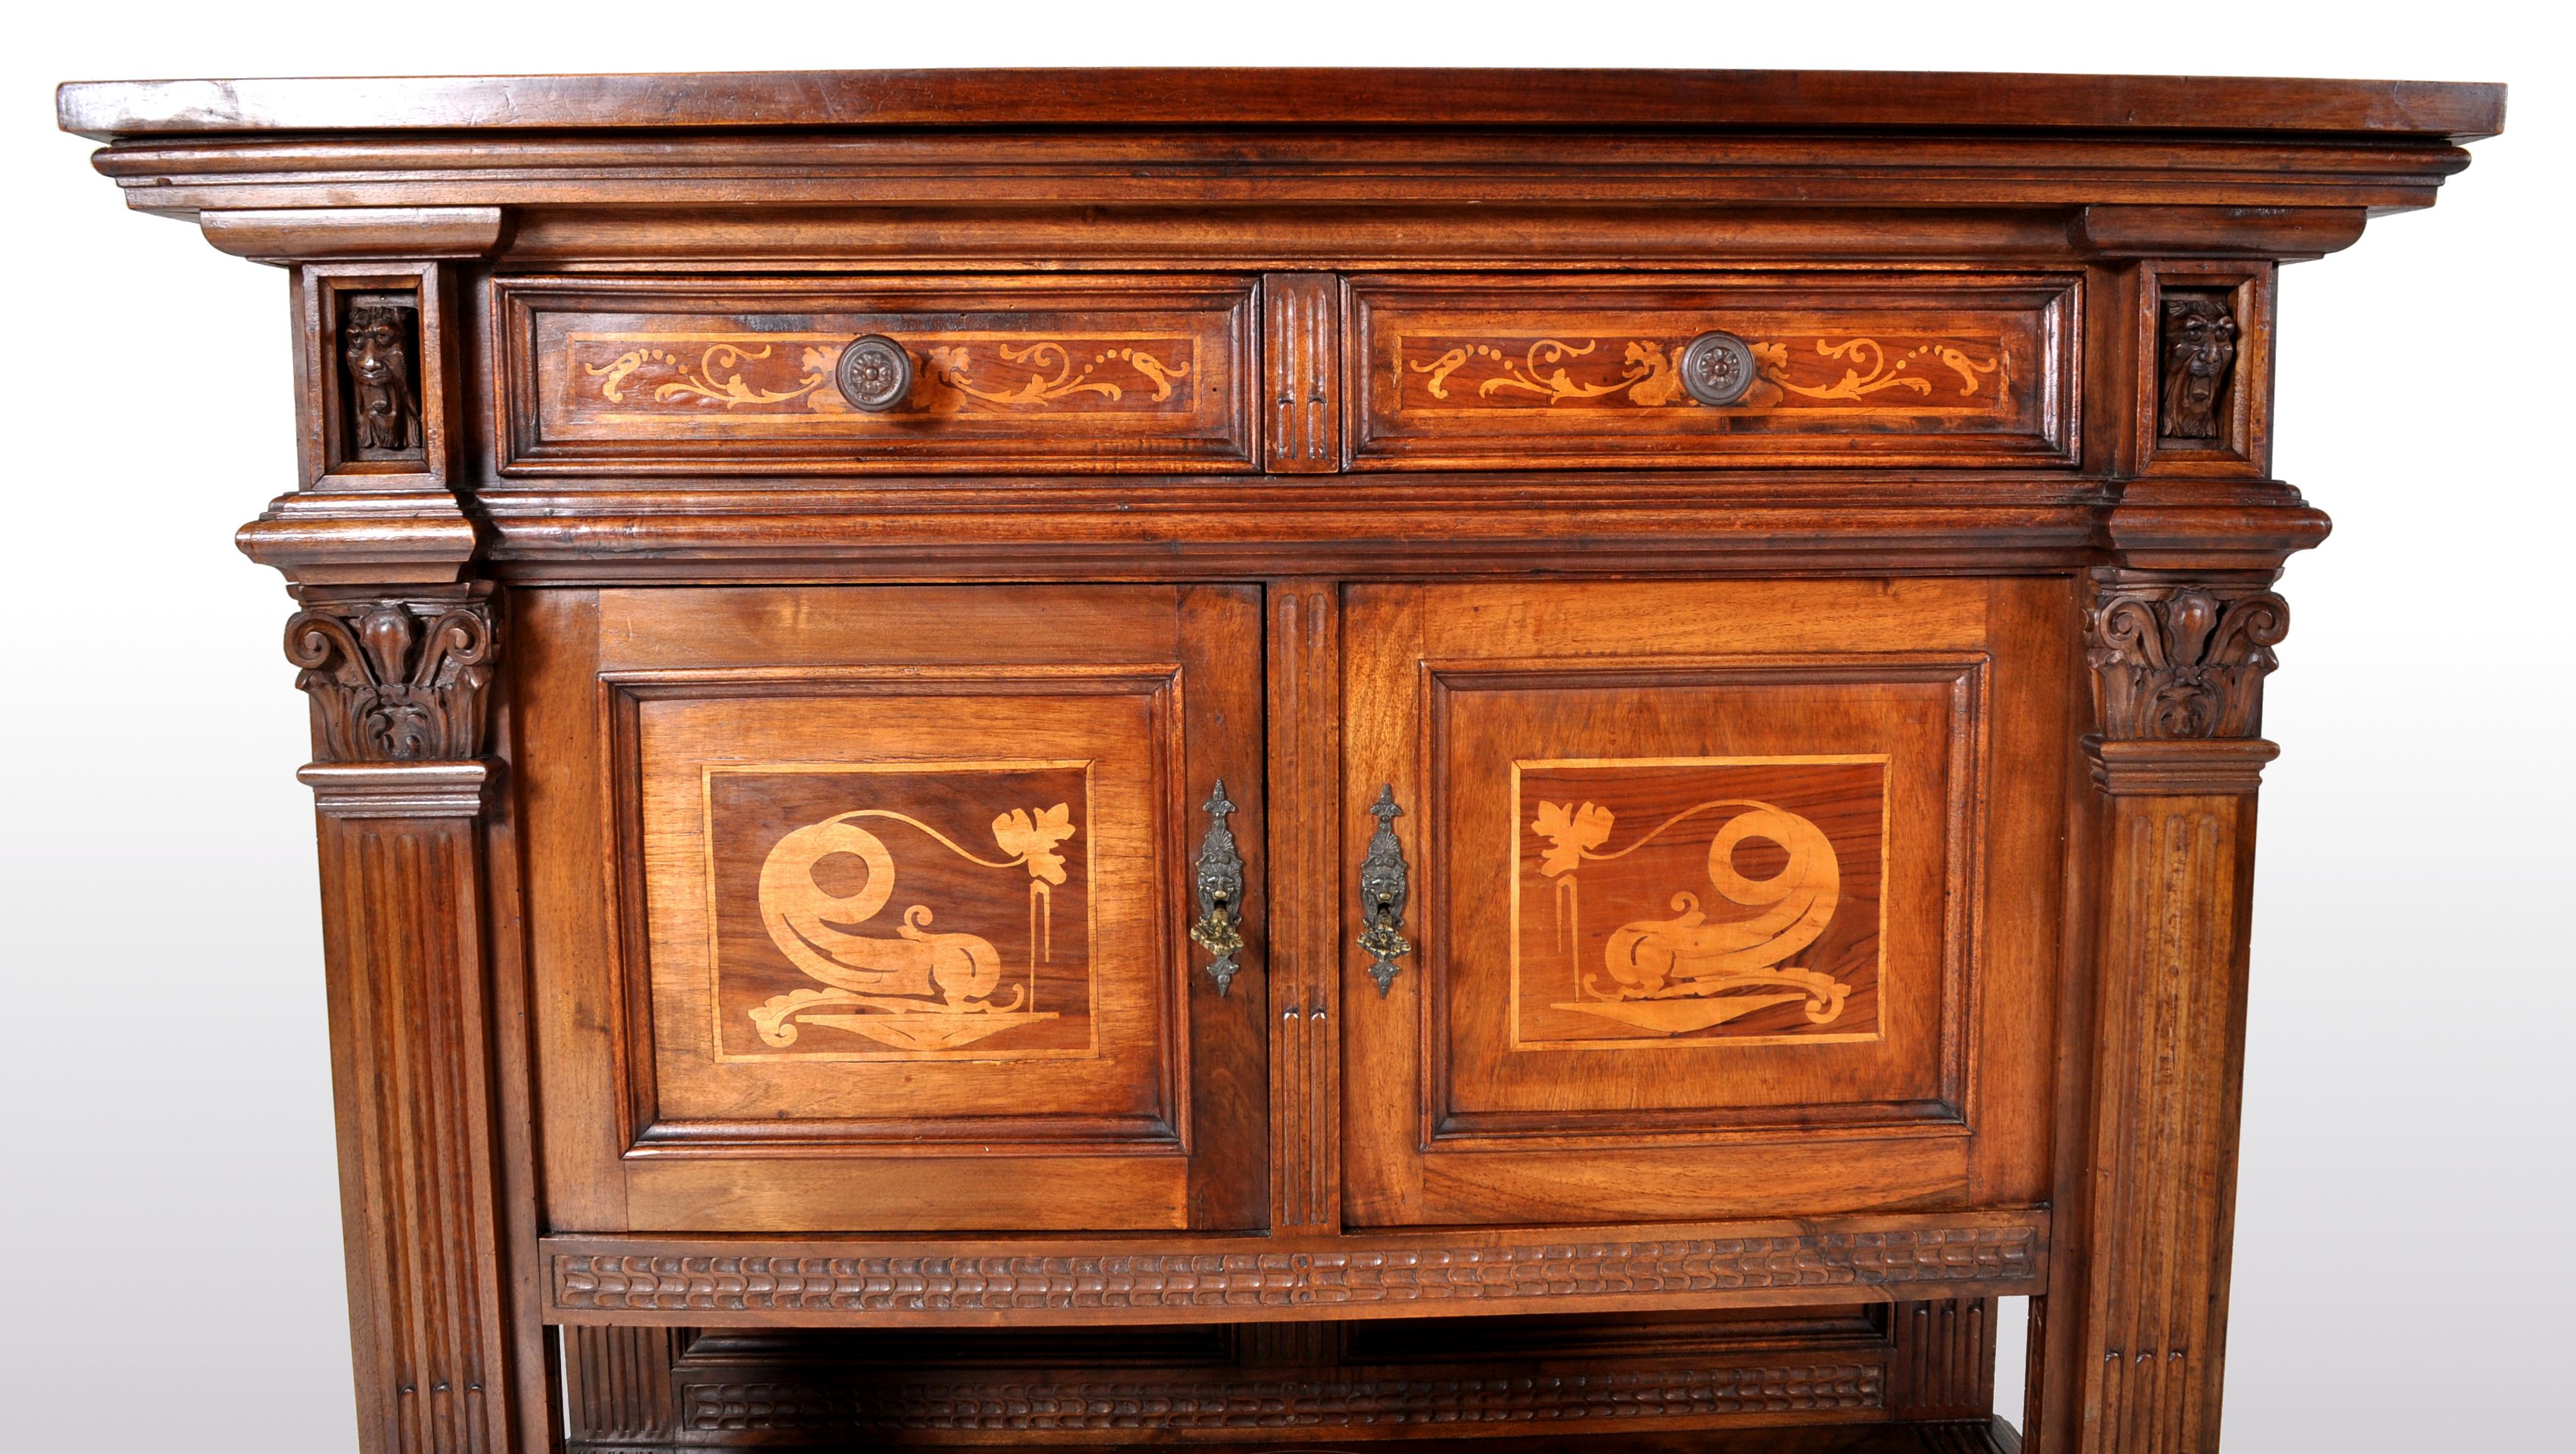 Fruitwood Antique Italian Renaissance Revival Walnut Marquetry Sideboard/Server circa 1880